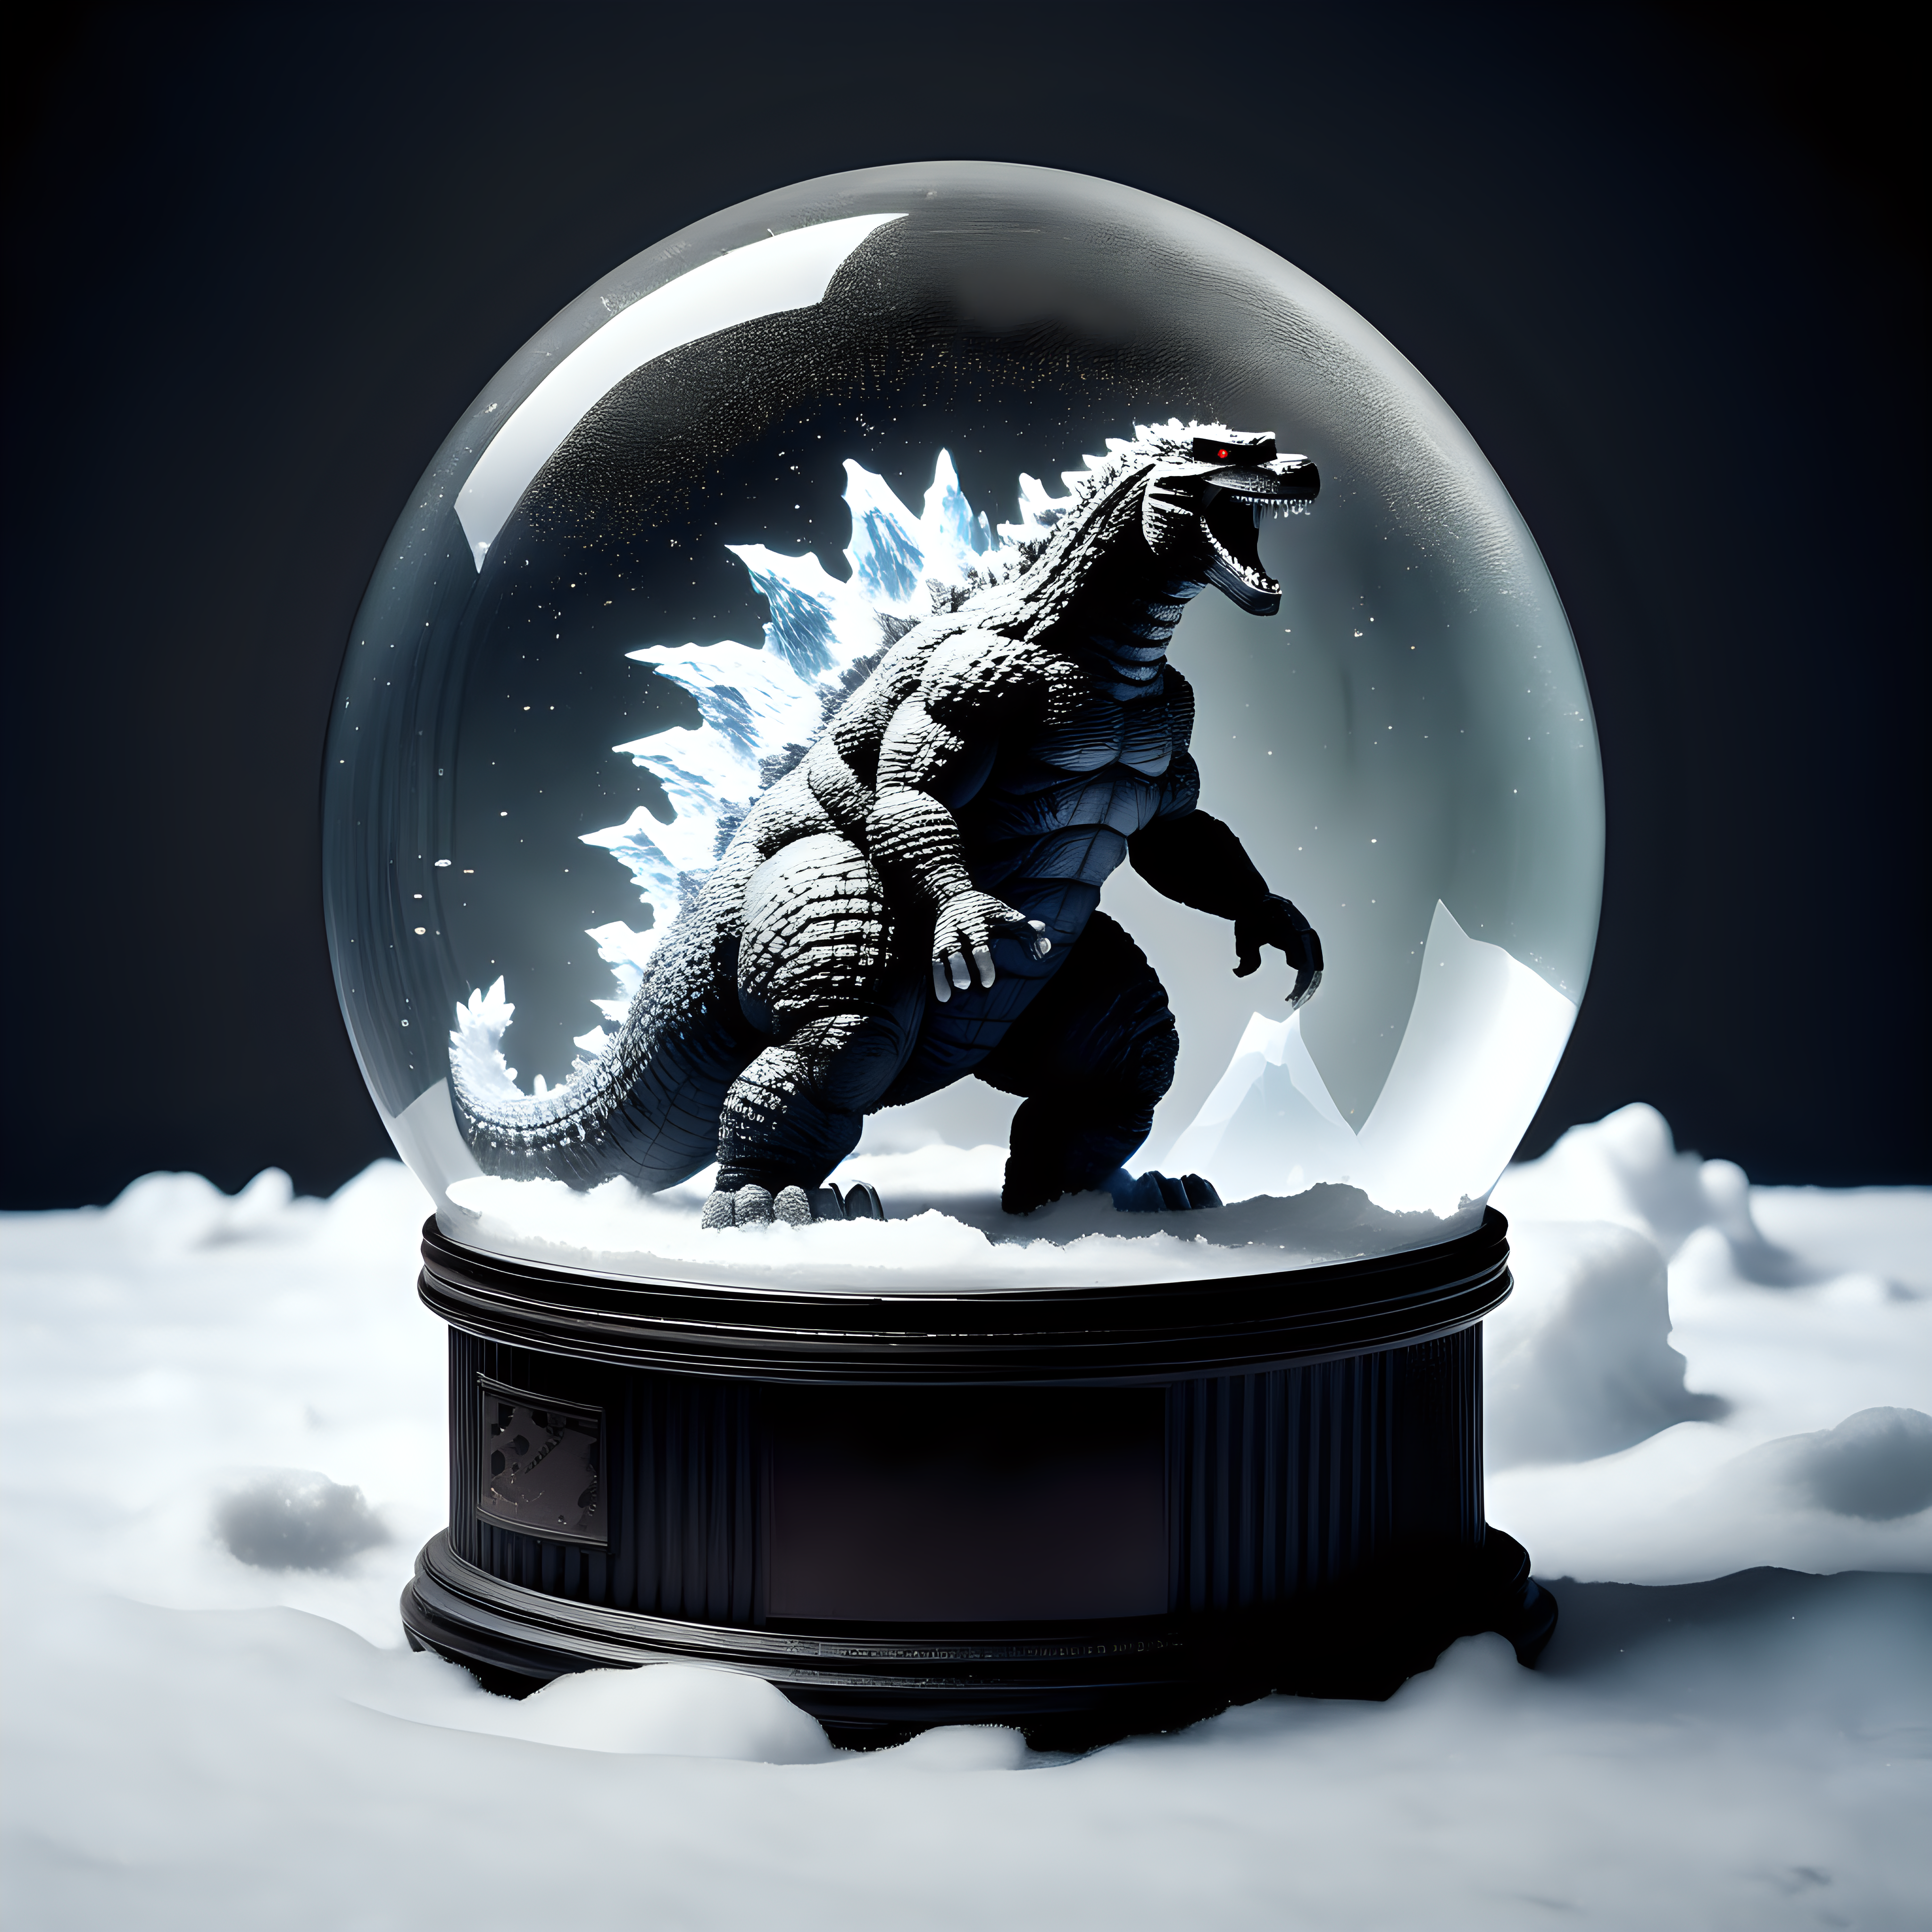 Godzilla in a snow globe